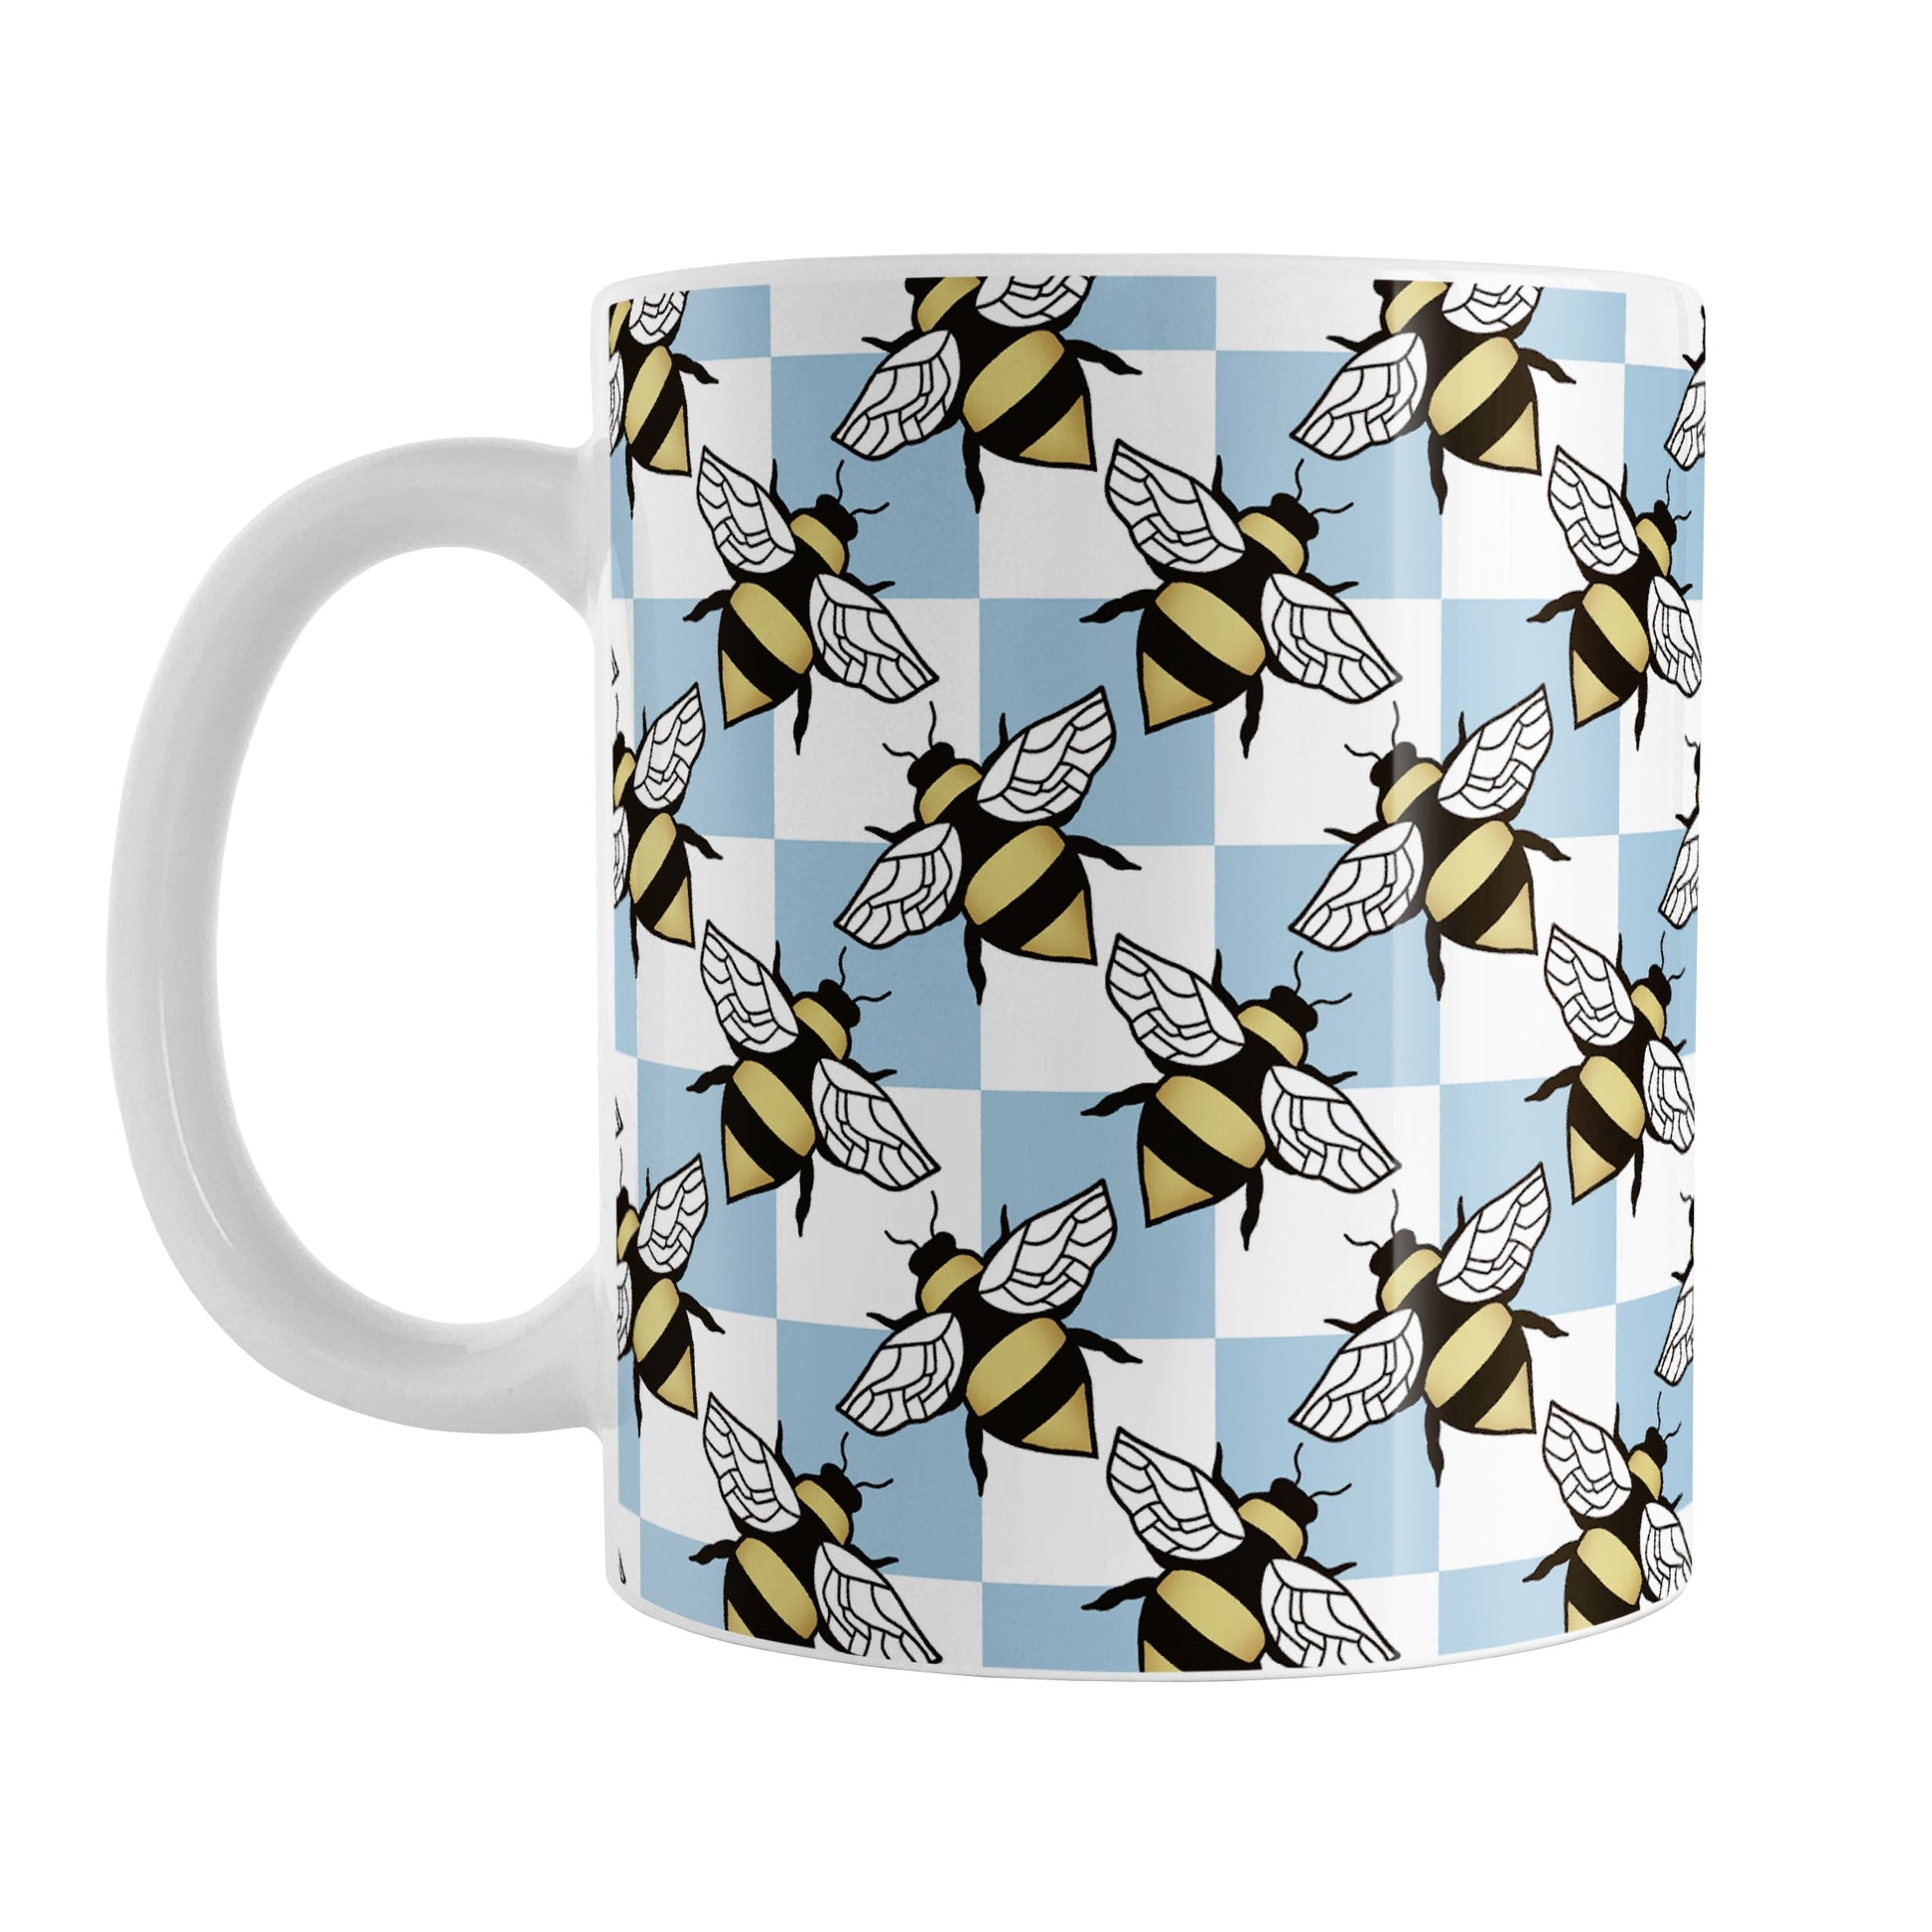 Blue Checkered Bee Mug (11oz) at Amy's Coffee Mugs